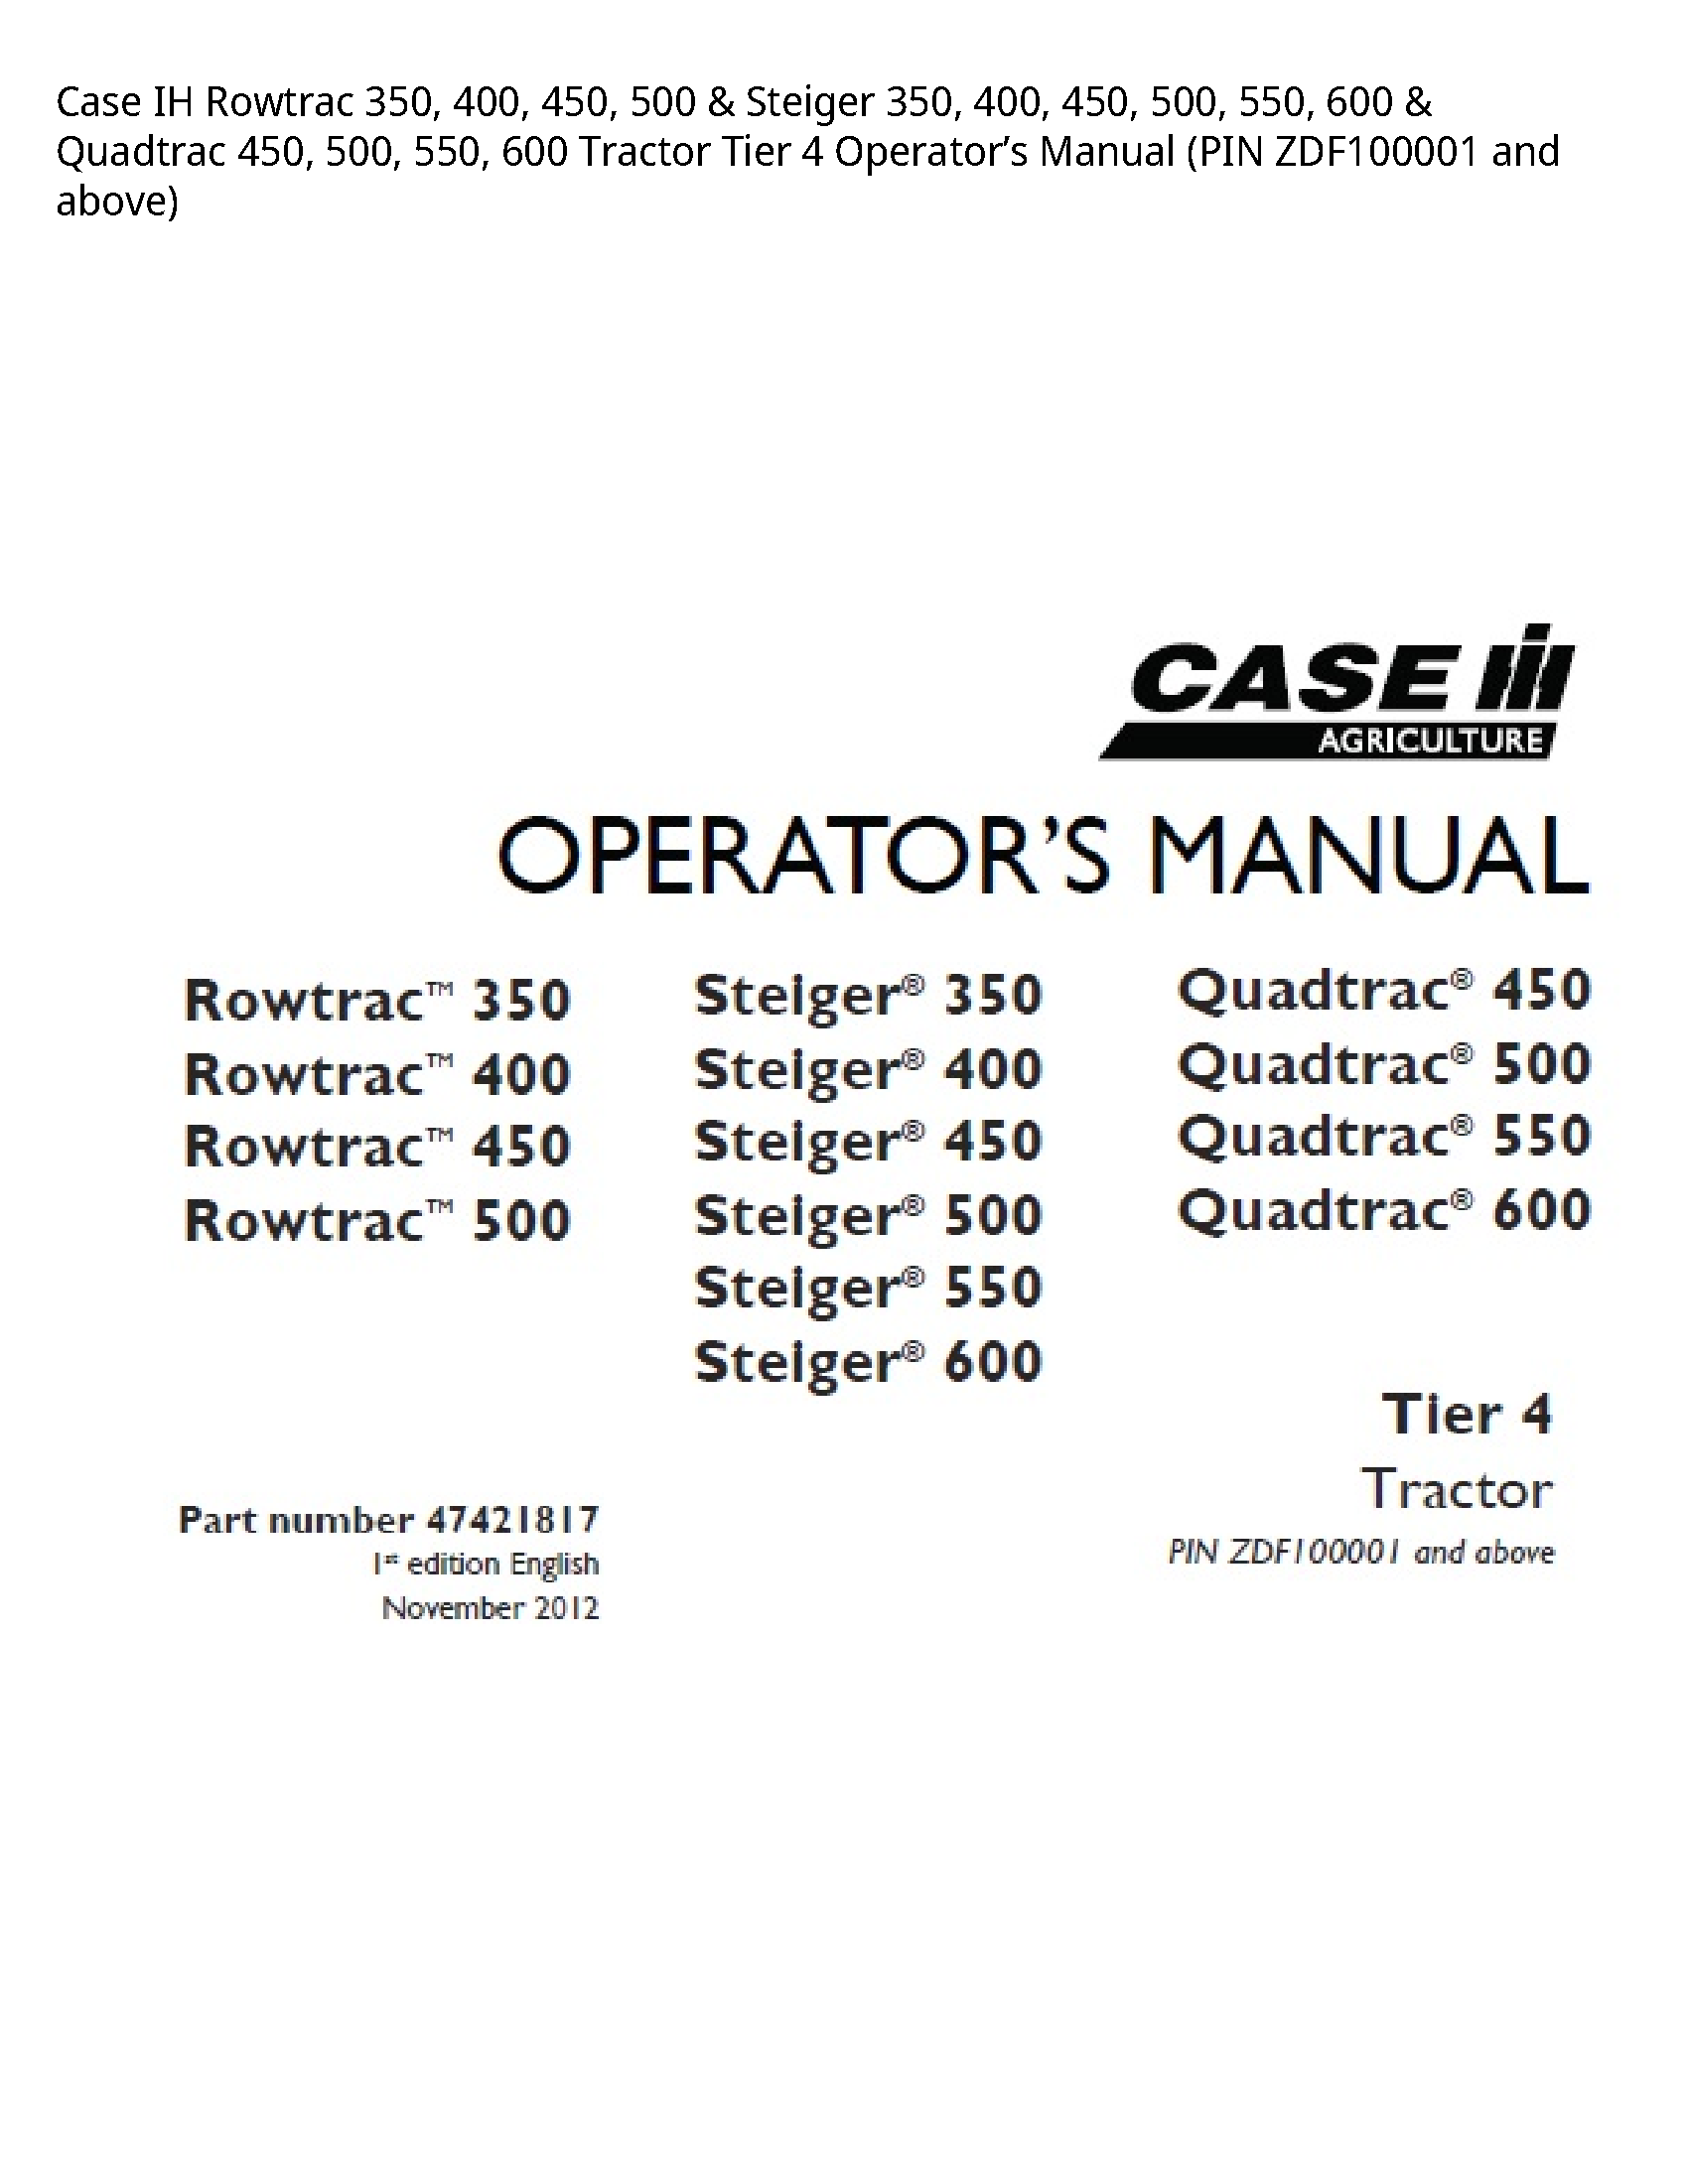 Case/Case IH 350 IH Rowtrac Steiger Quadtrac Tractor Tier Operator’s manual